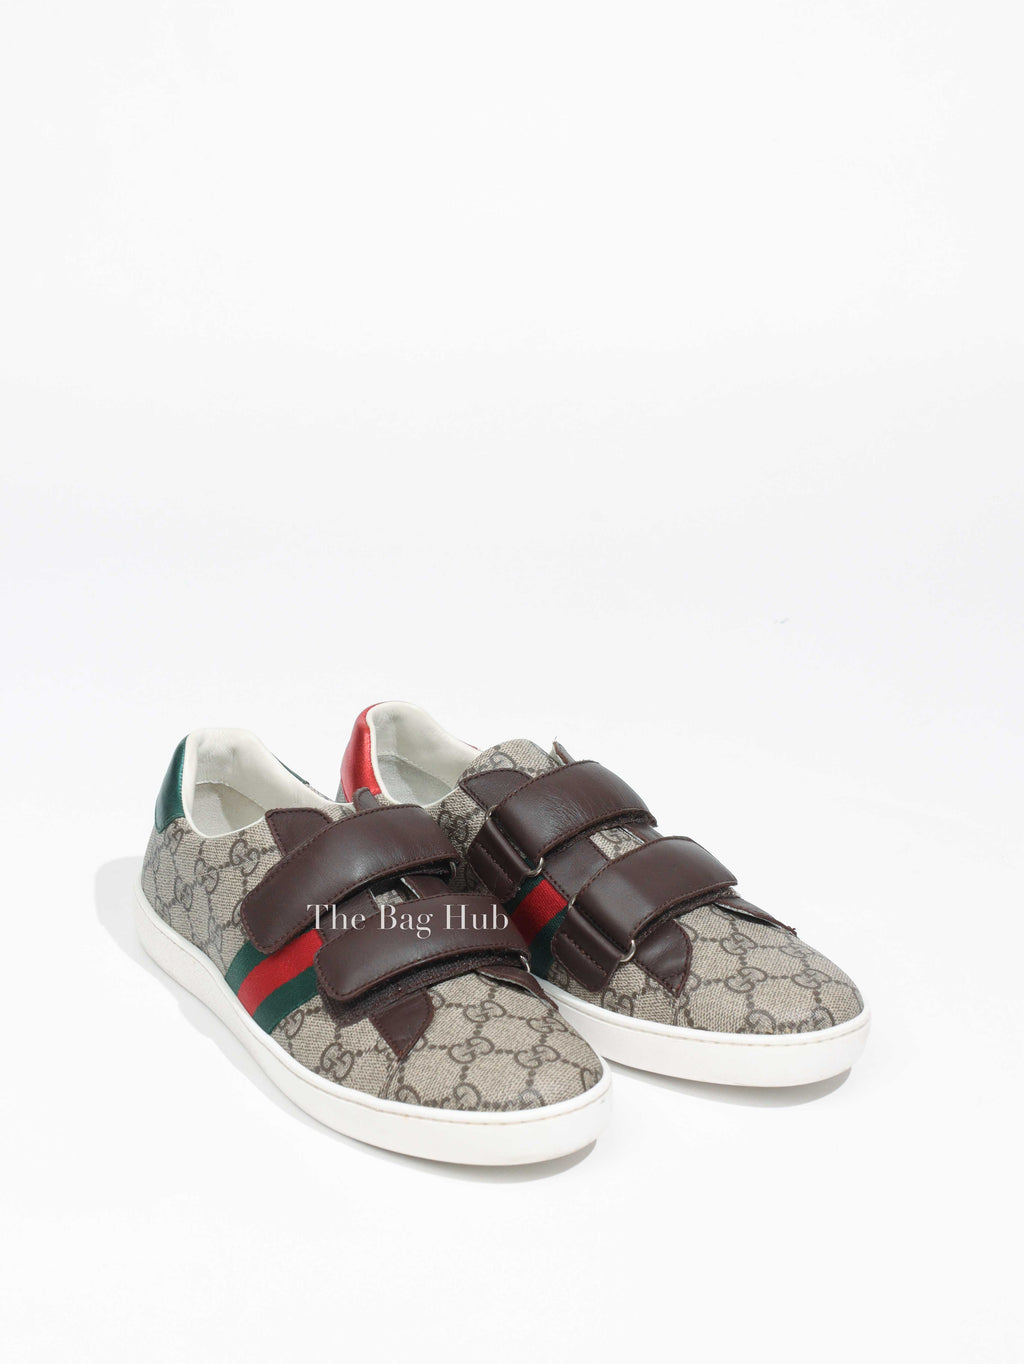 Gucci Beige/Ebony GG Supreme Ace Web Sneakers Size 37-1